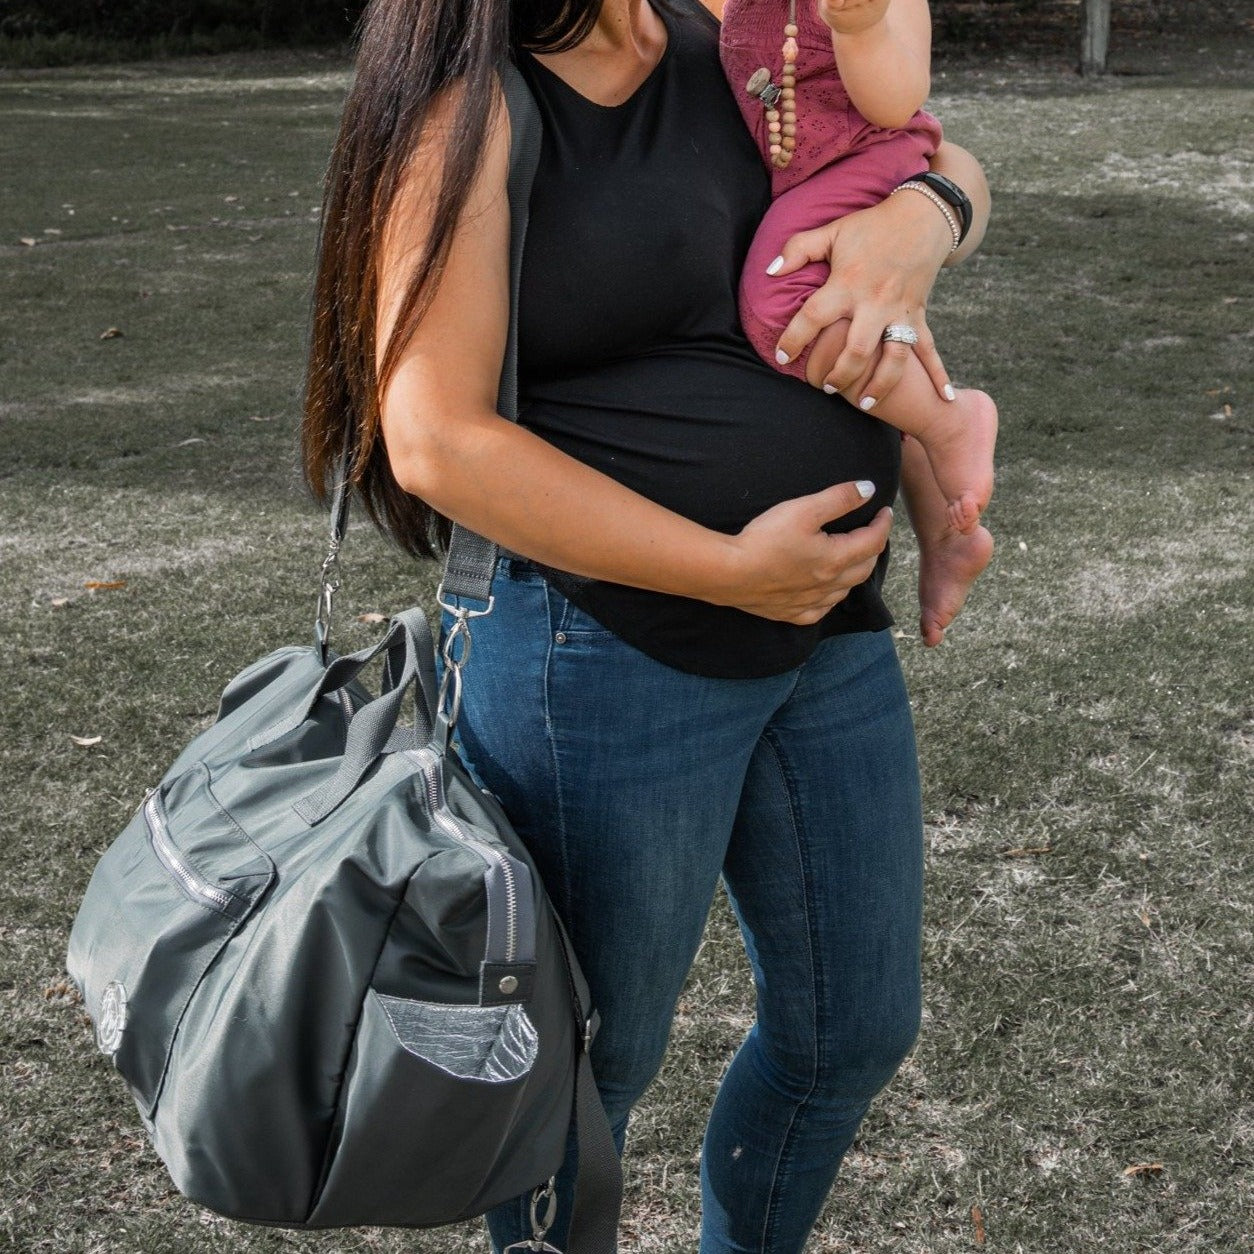 alt="Pregnant mum wearing Mummas Wear The DUFFLE Nappy Bag cross body while holding baby"